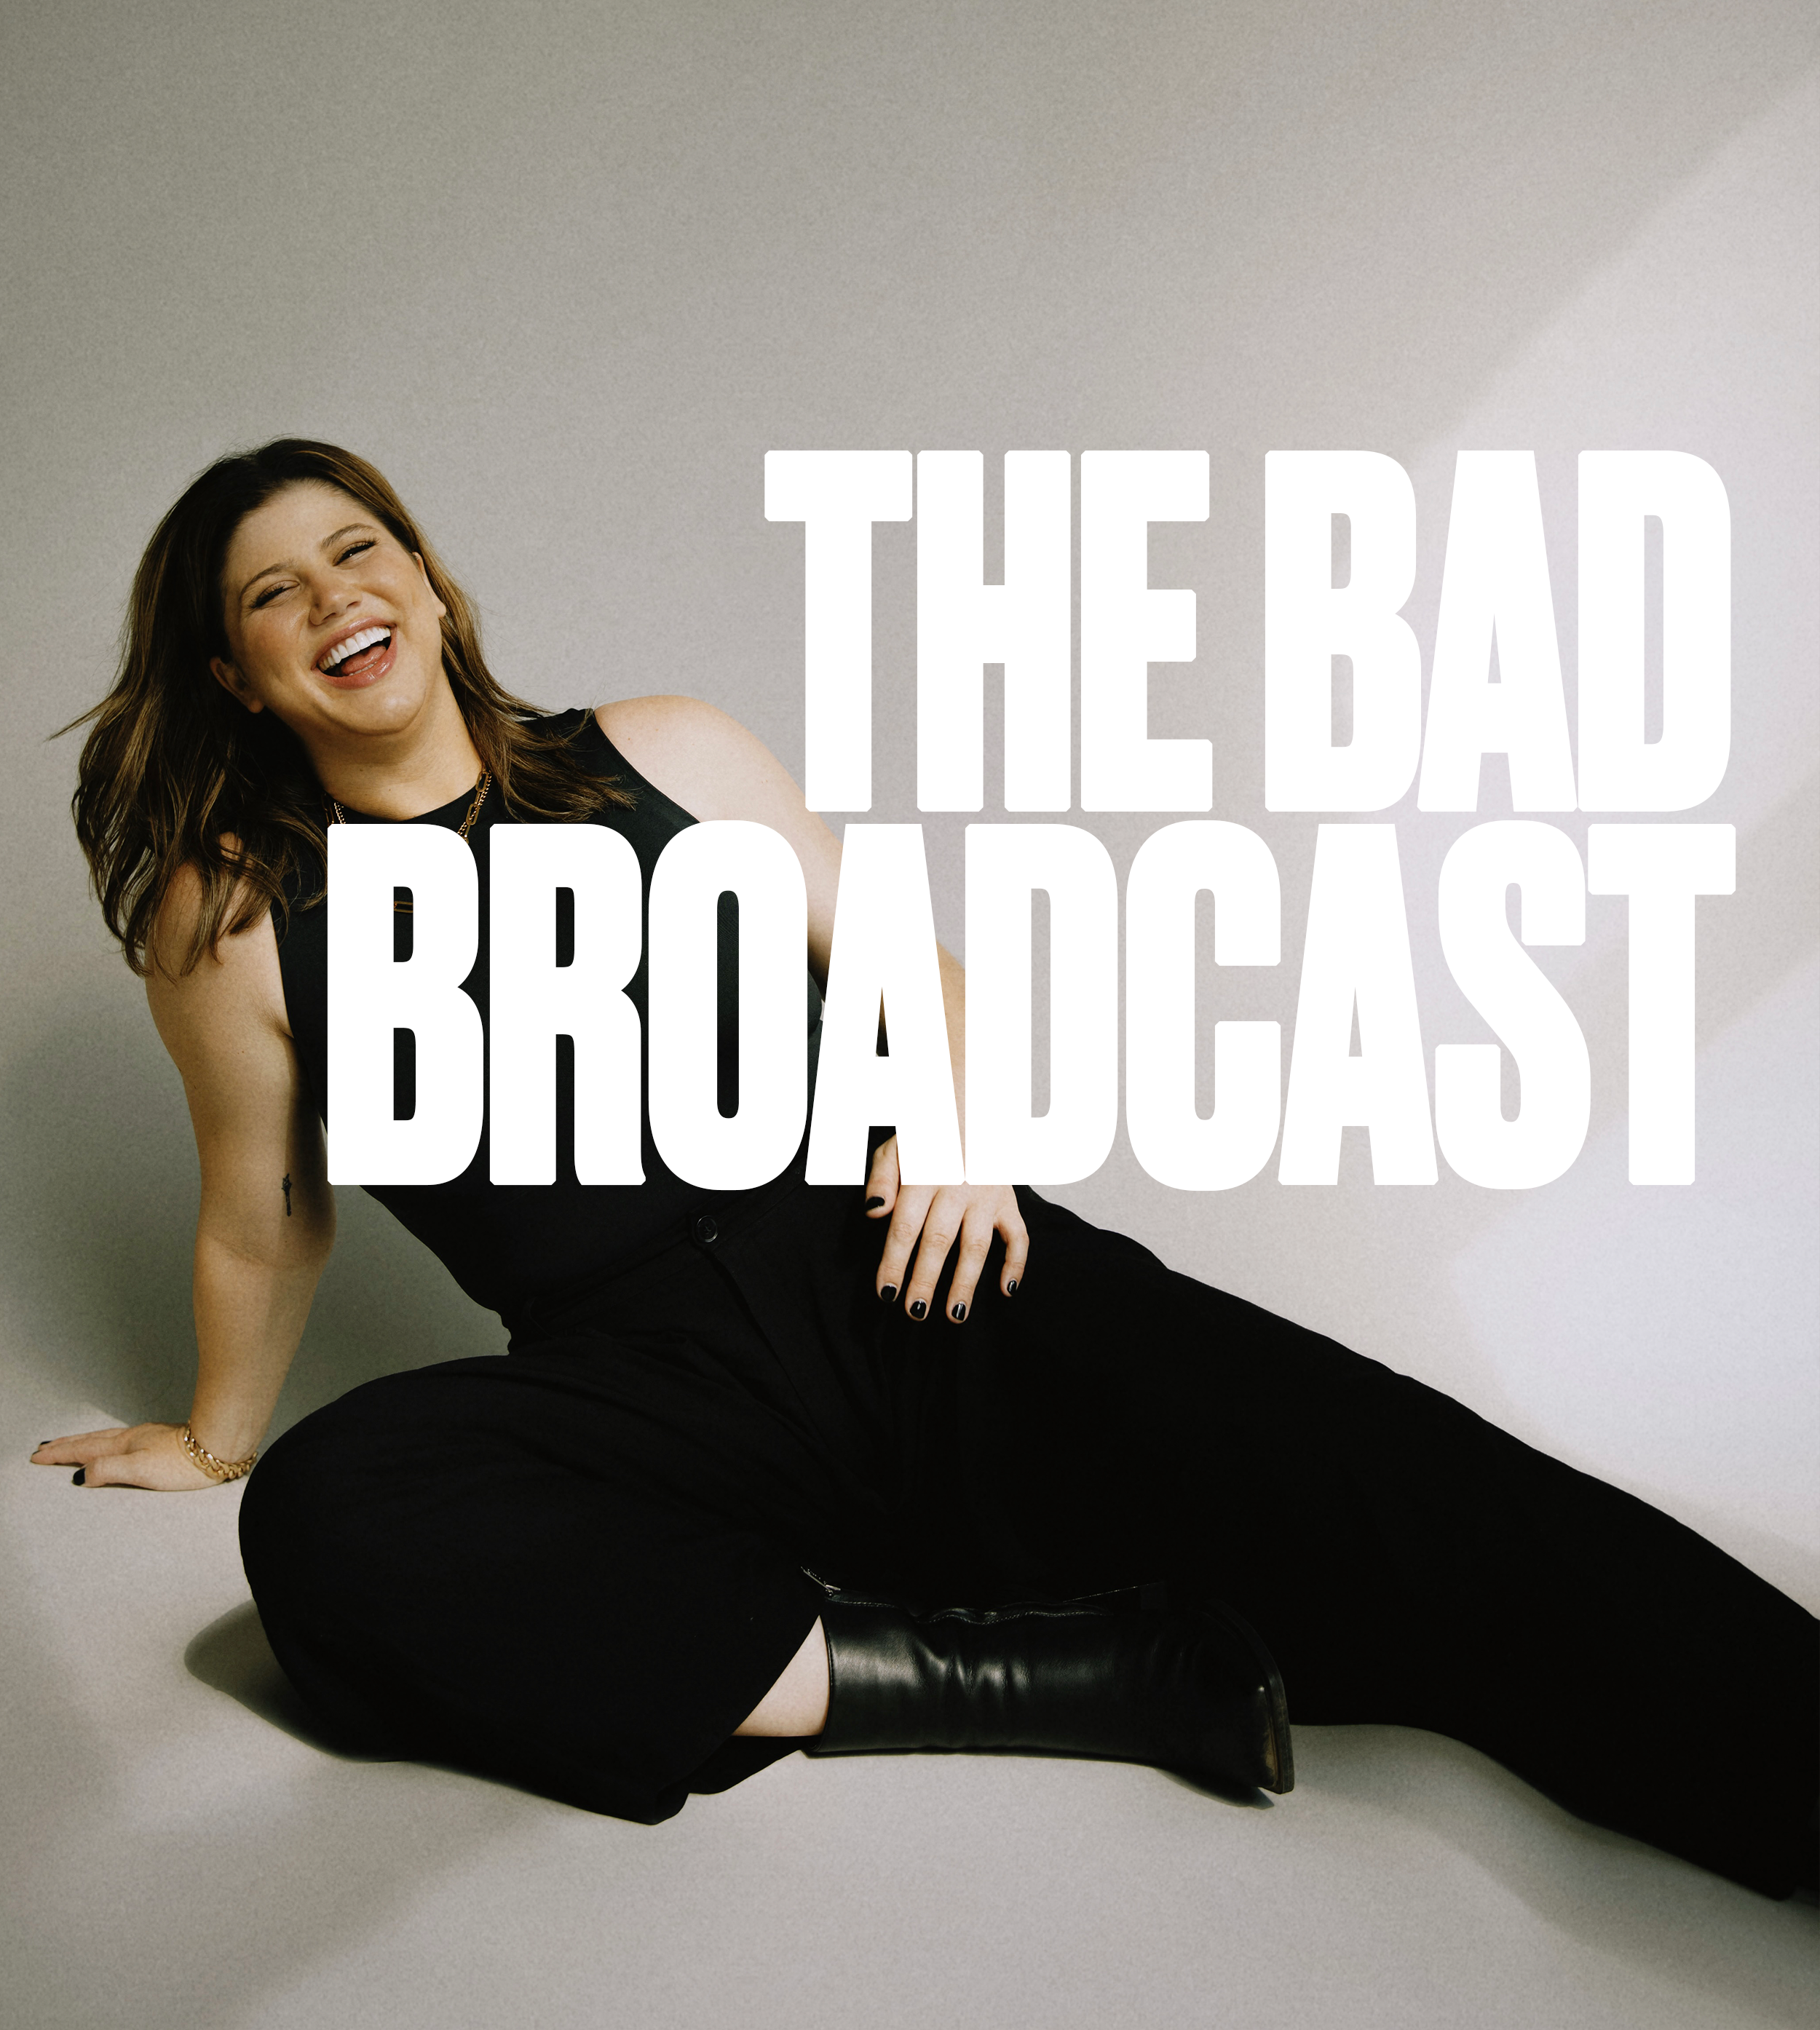 The Bad Broadcast